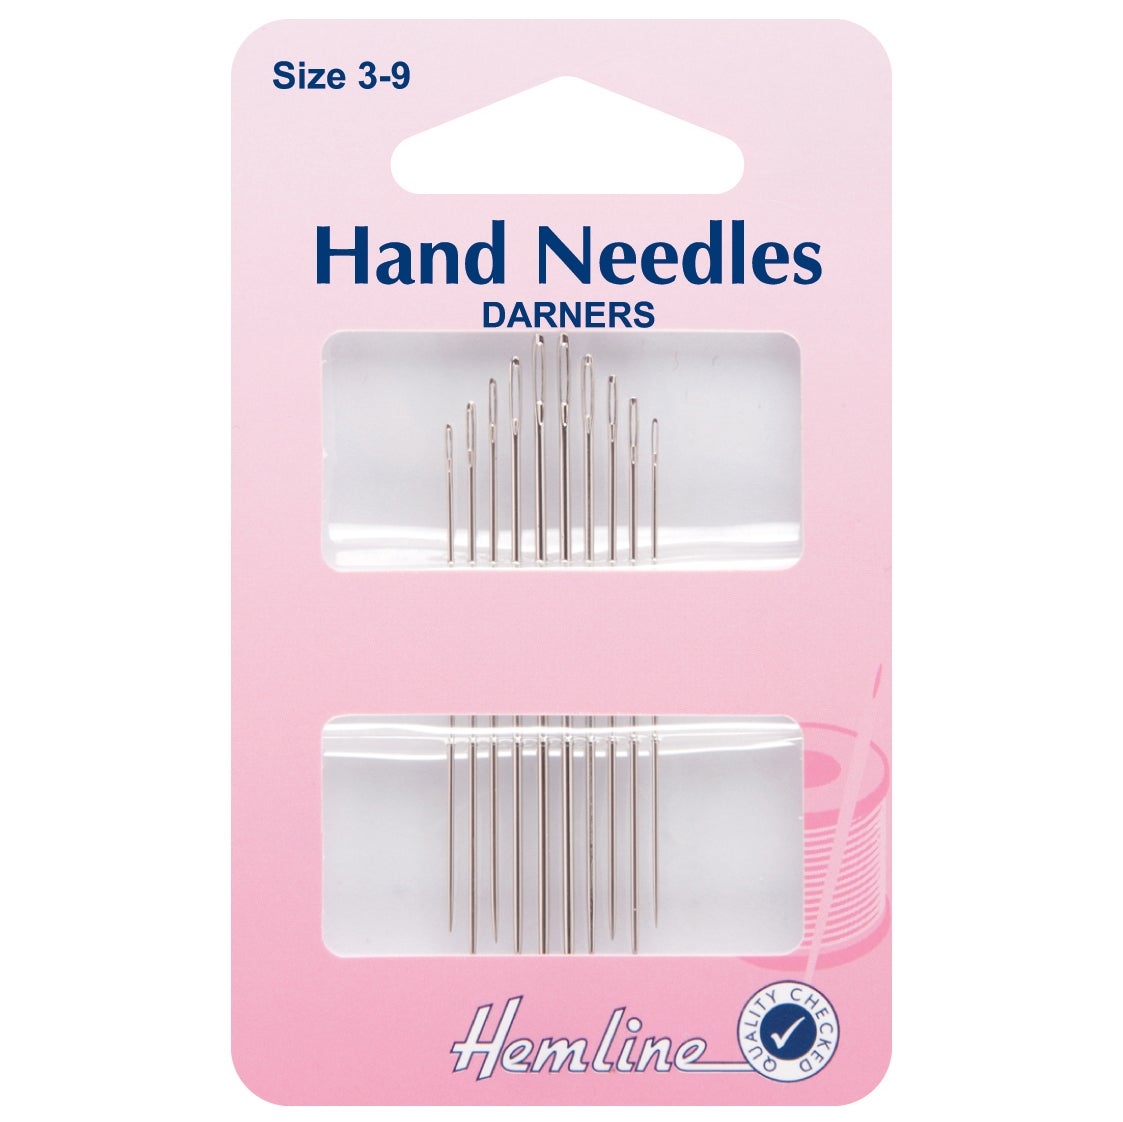 Hemline Darners 3-9 Hand Needles | Dunelm